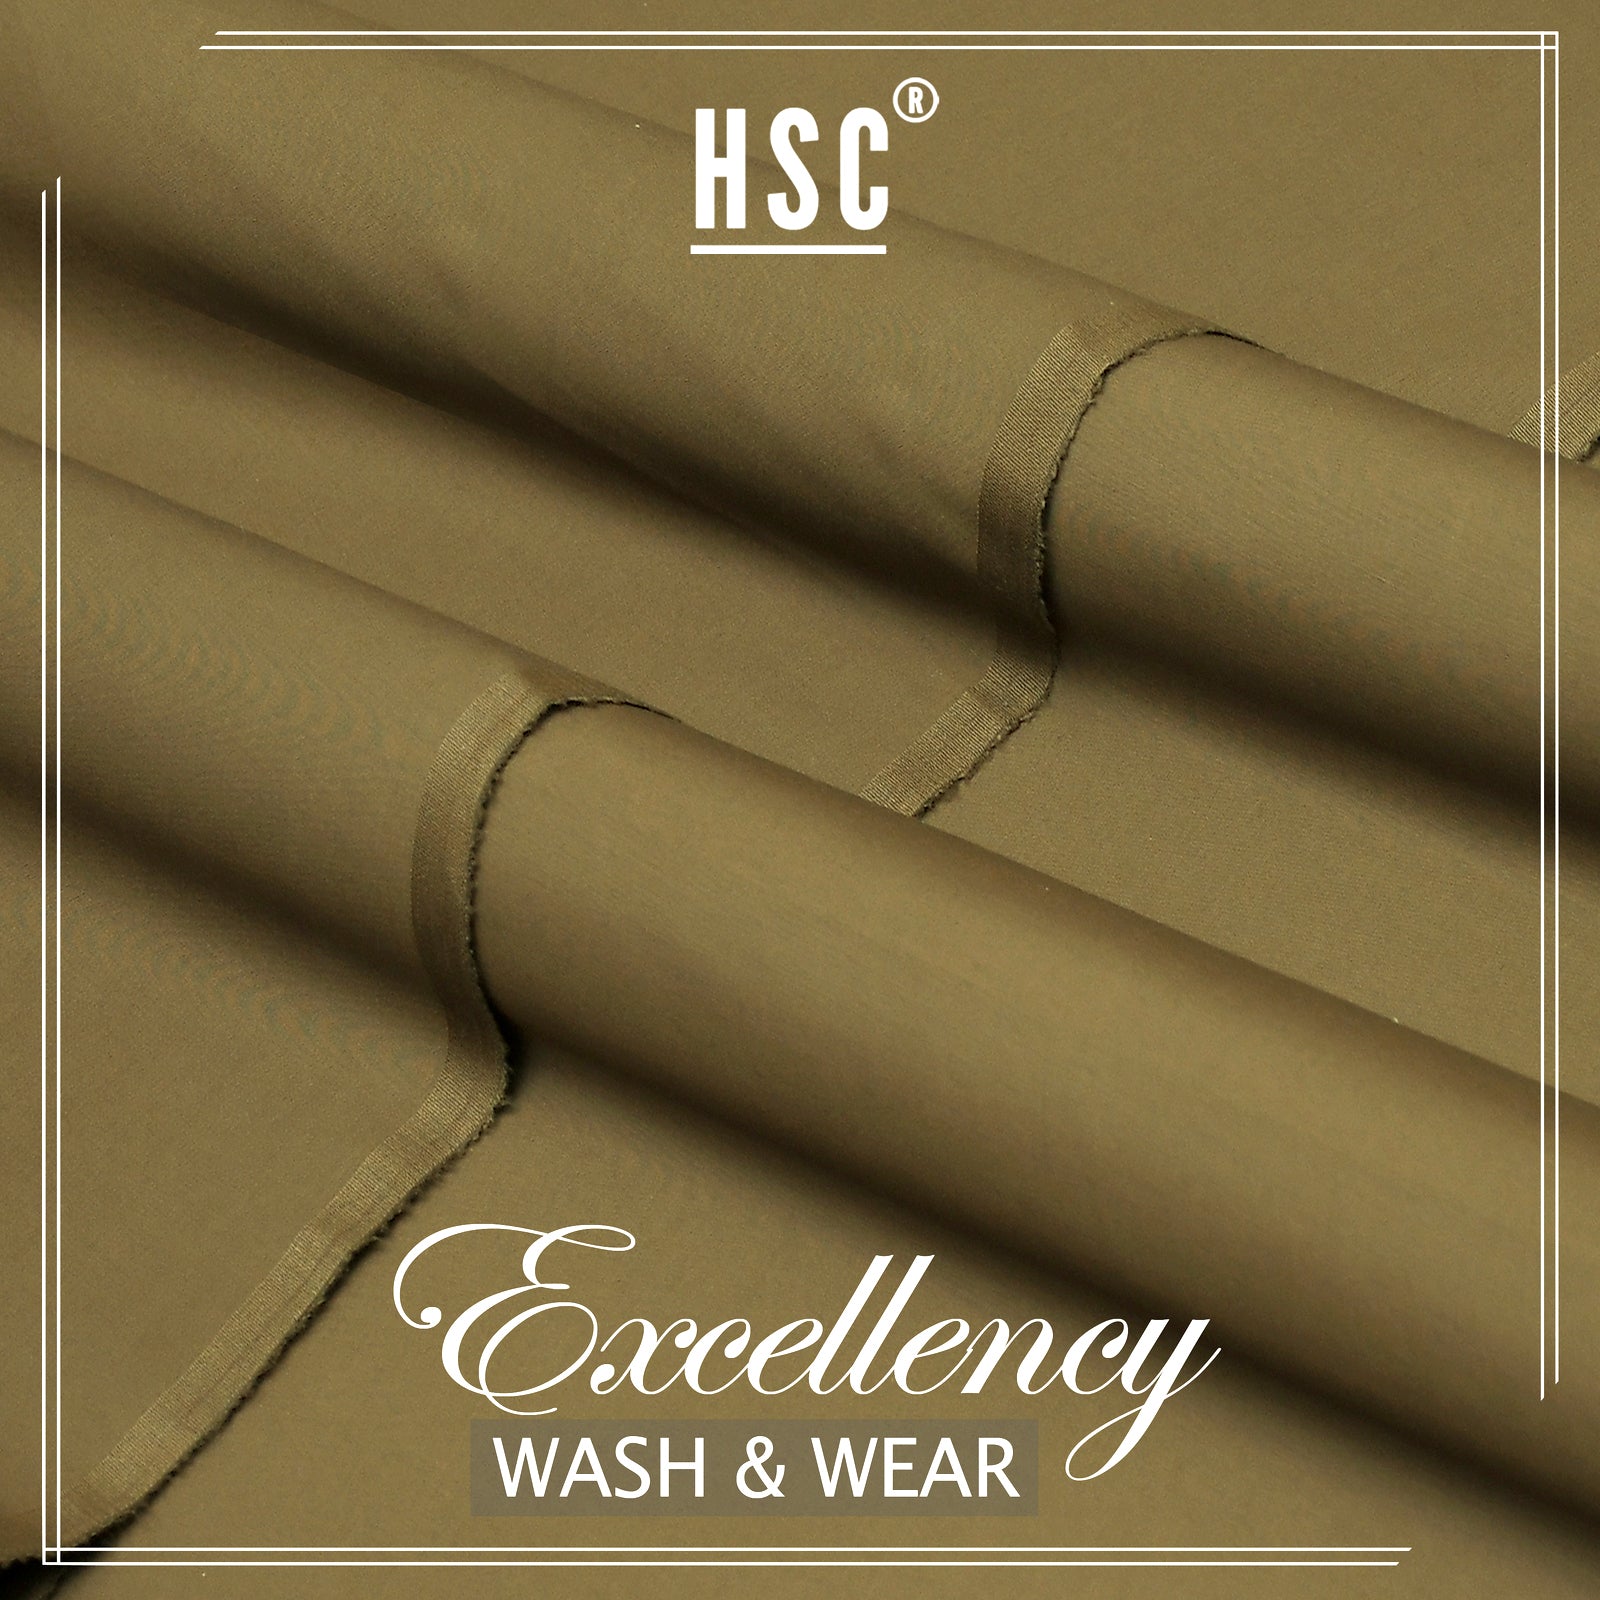 Excellency Wash & Wear For Men - EWA5 HSC